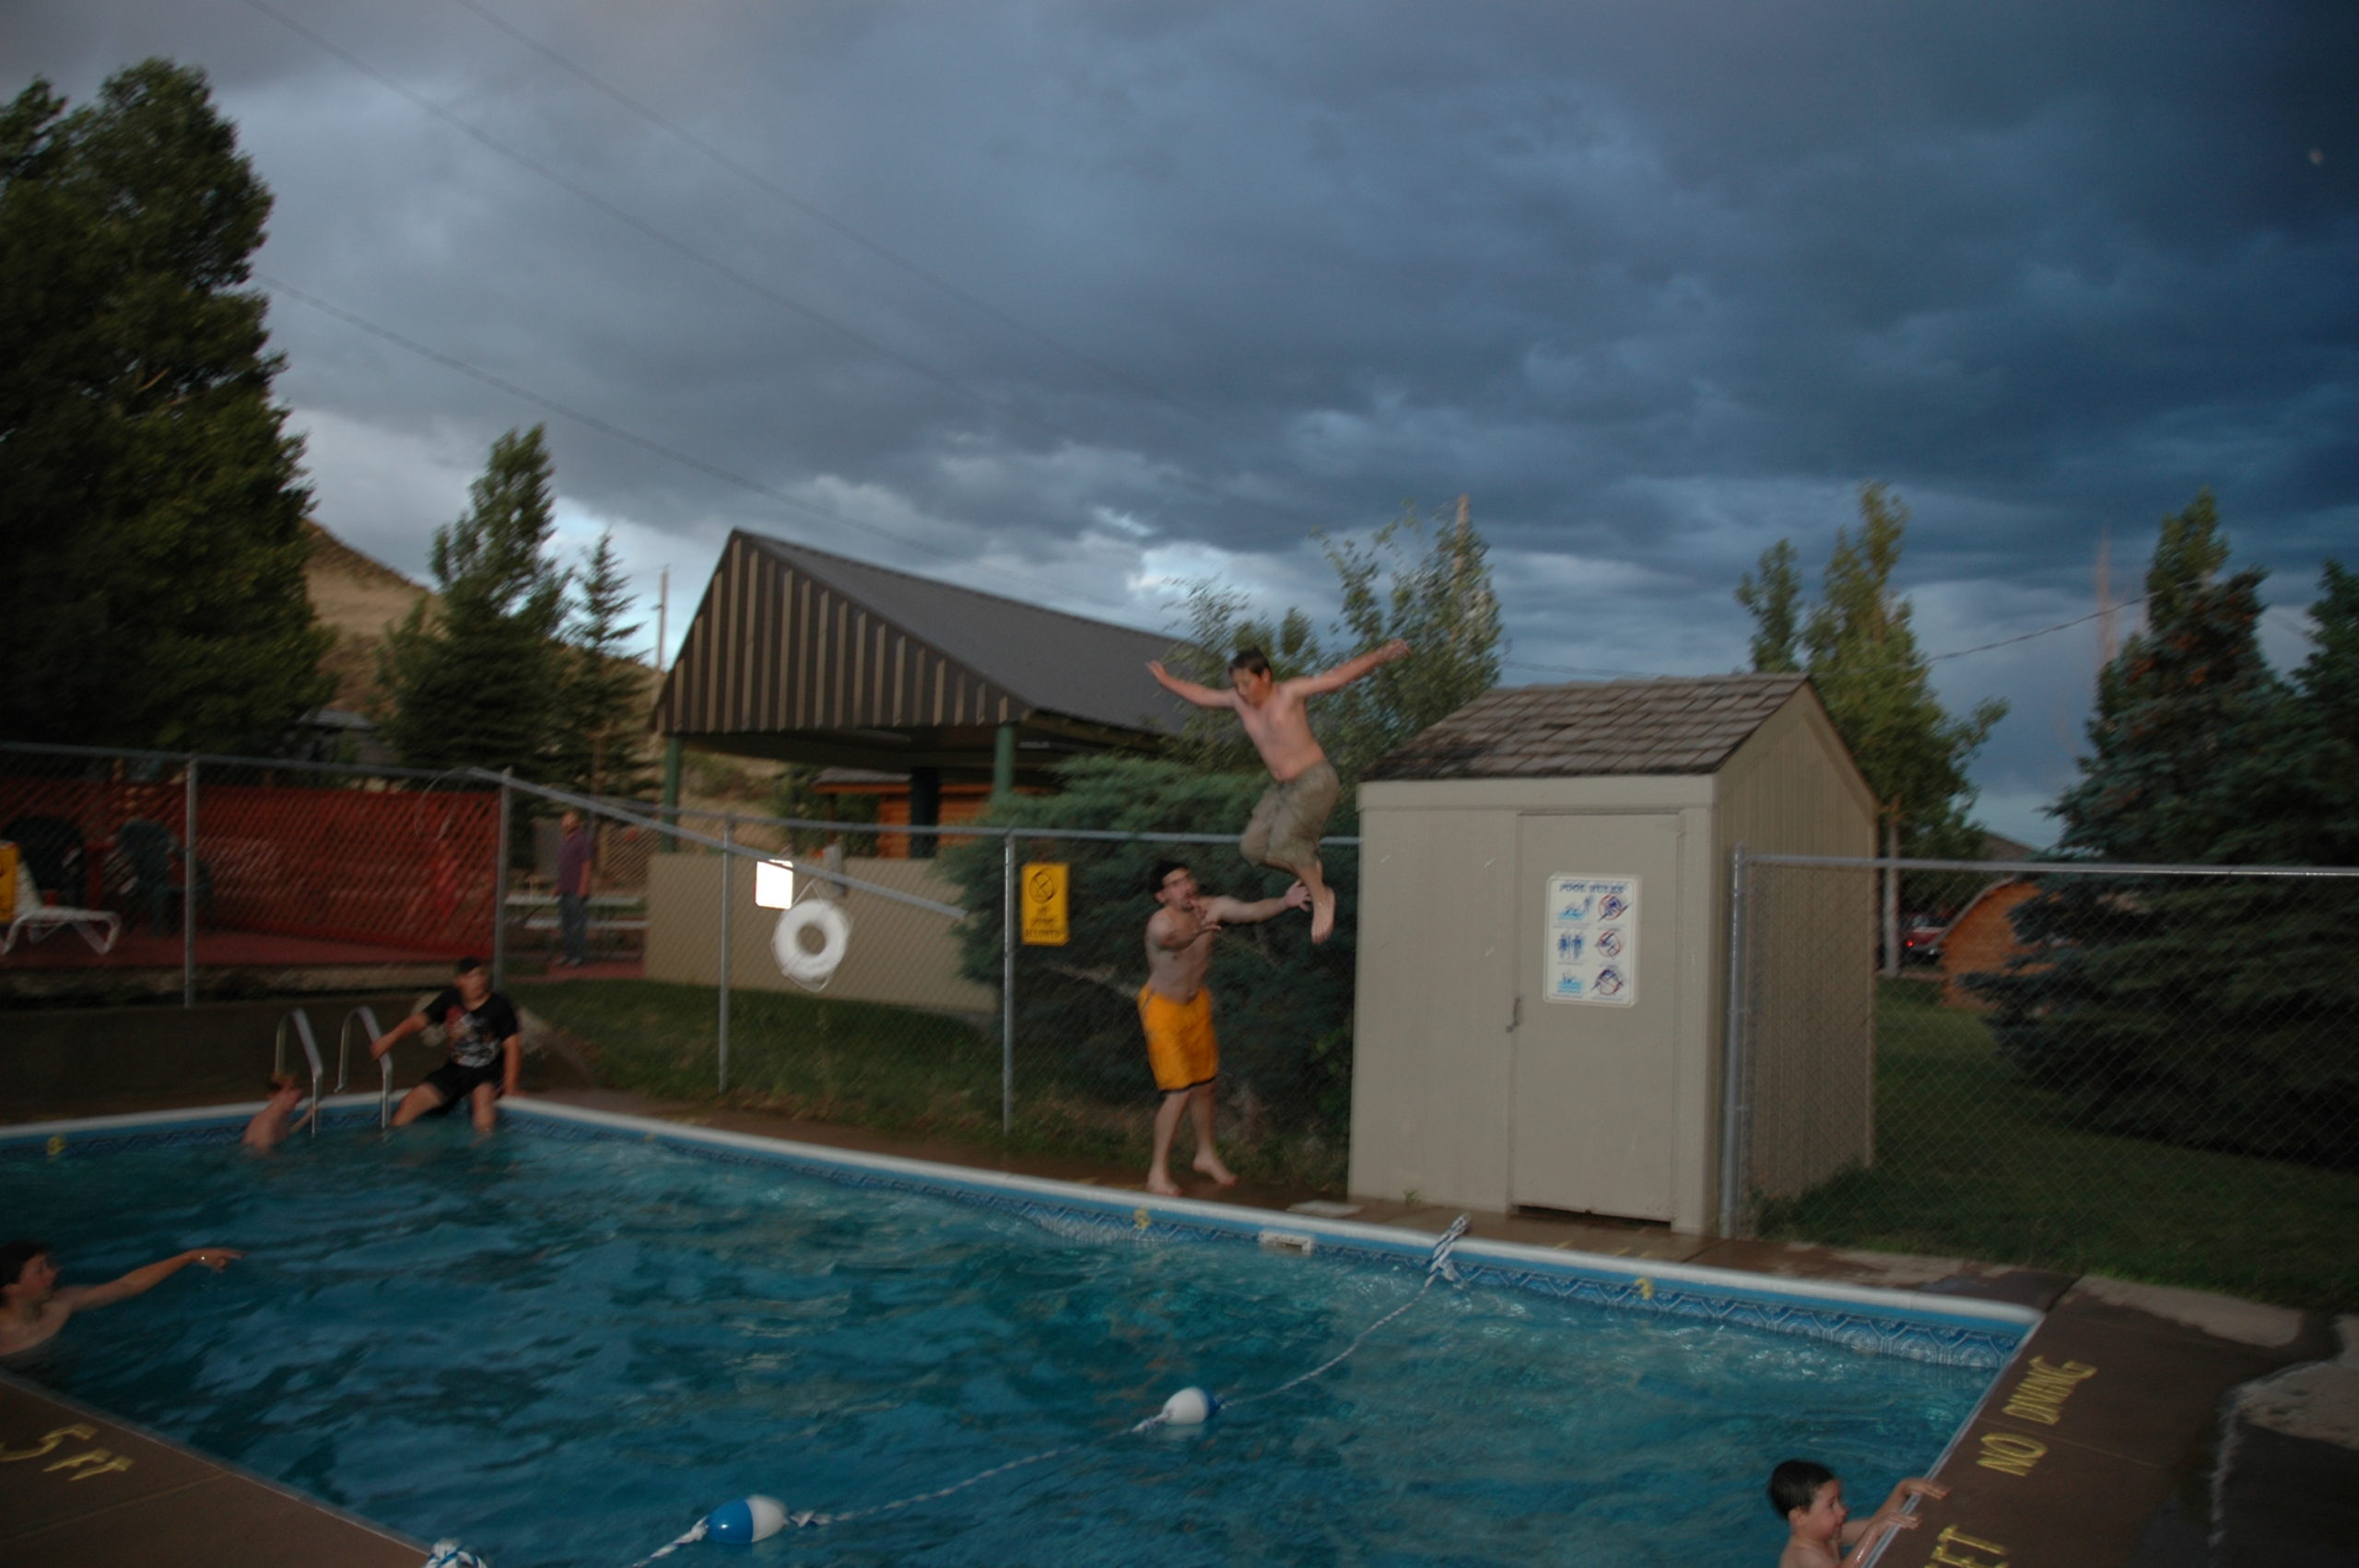 Northern Colorado Camping Trip - David Leader pool fun